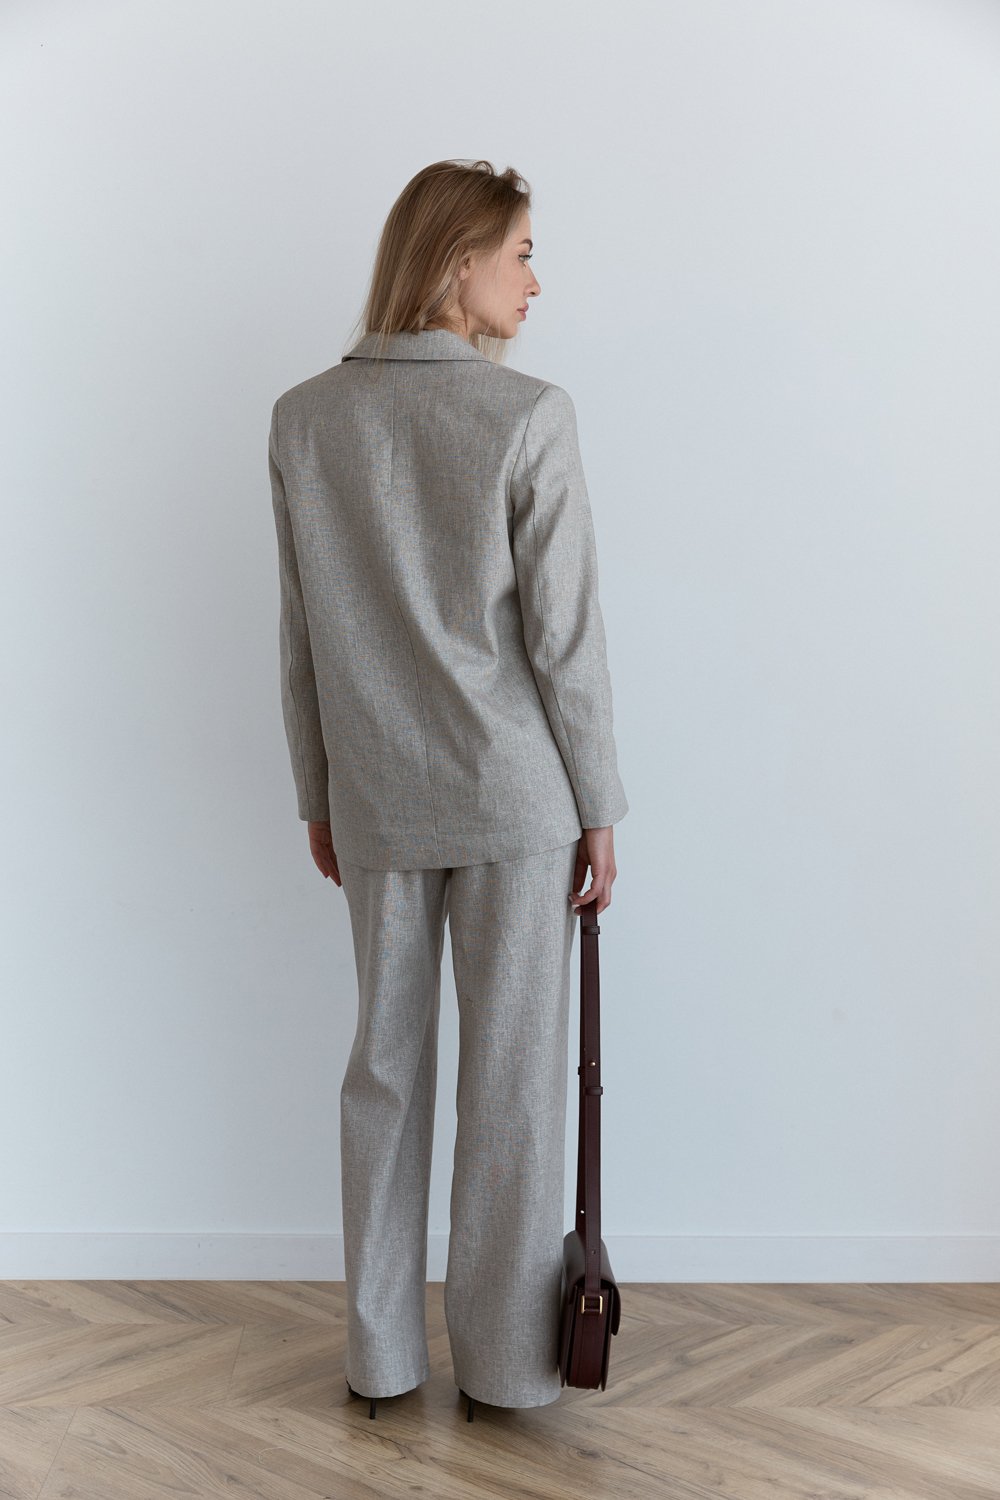 Oversized gray linen jacket